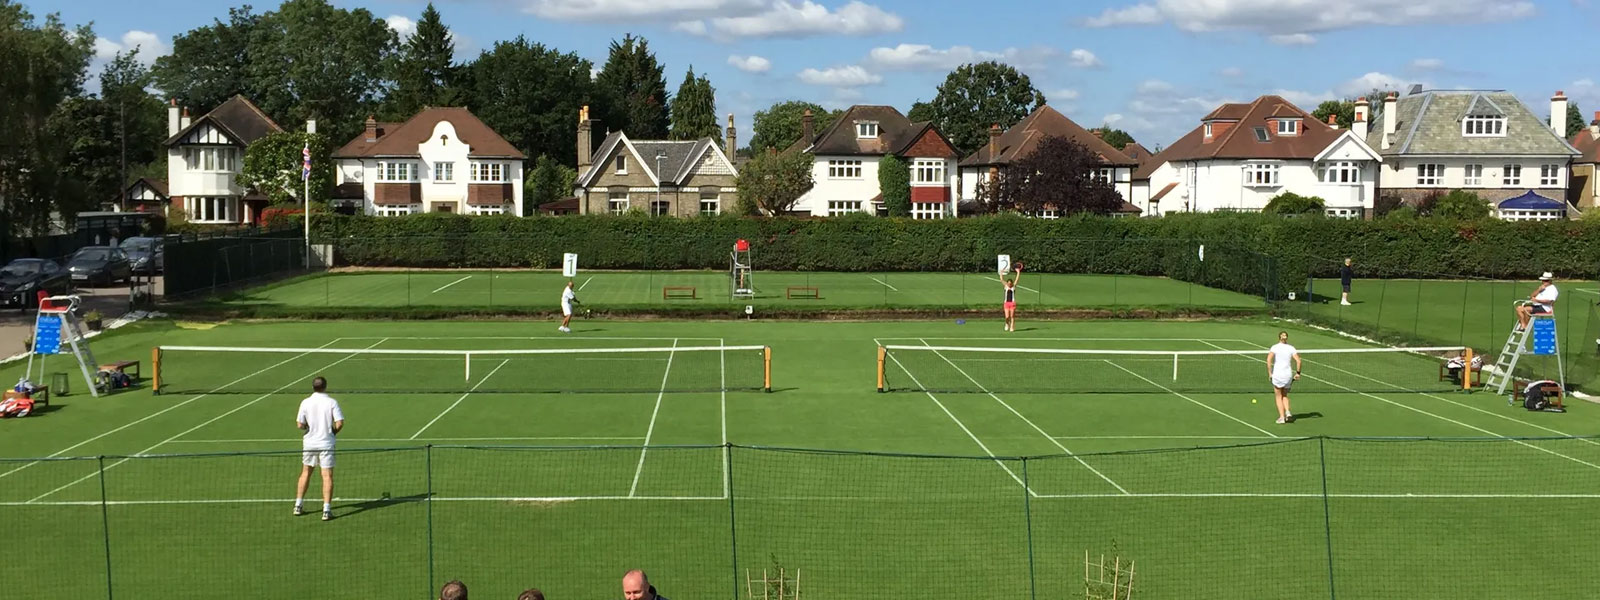 Surbiton outdoor tennis courts